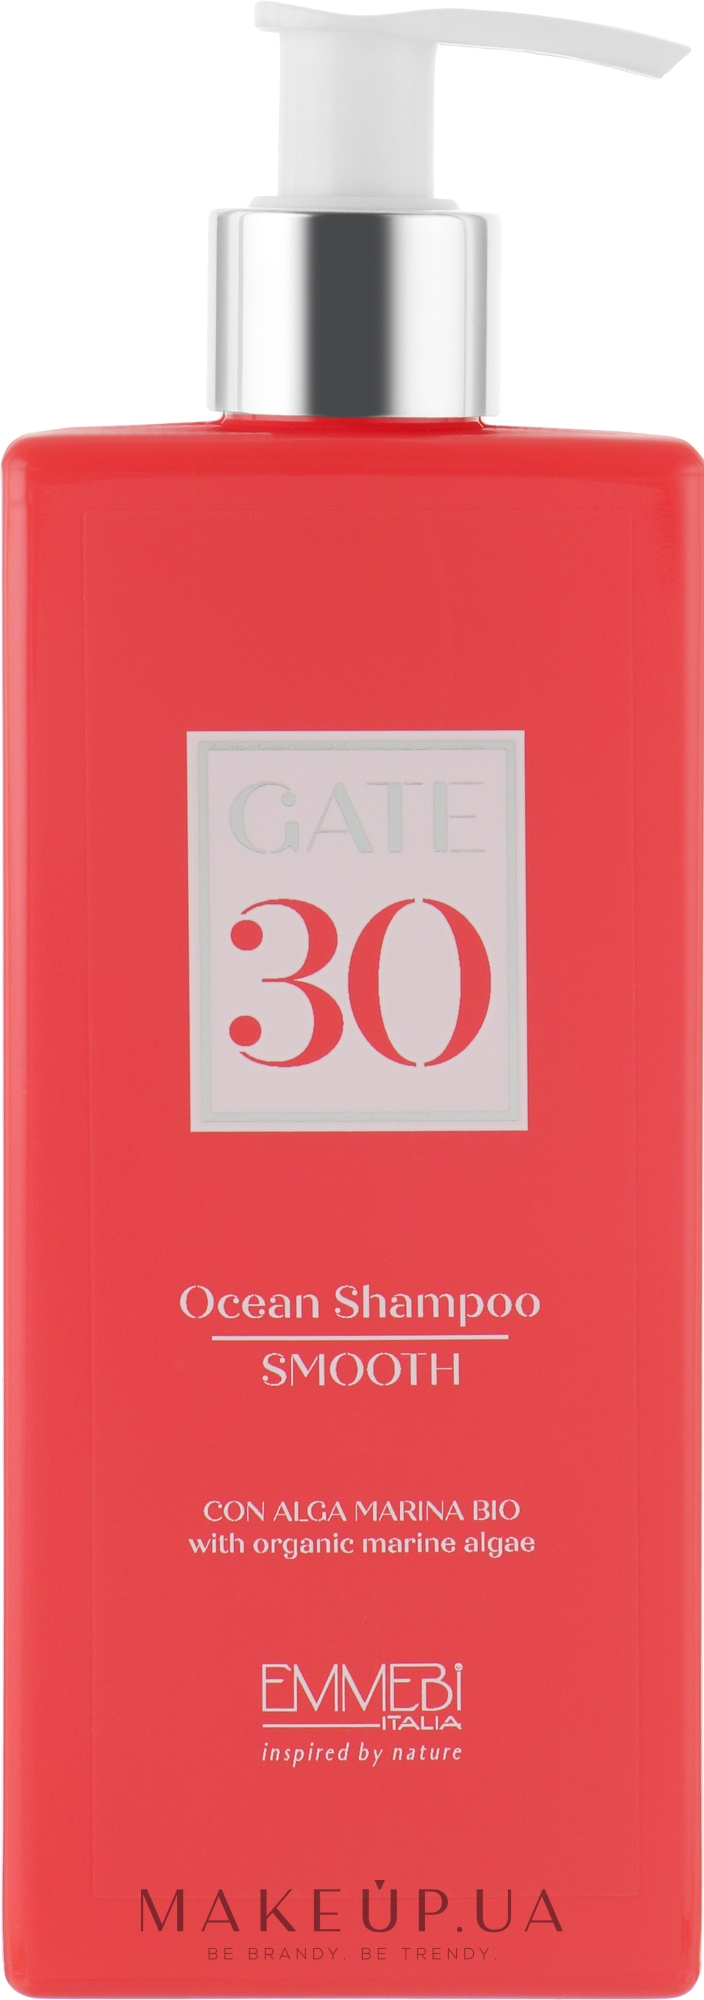 Вирівнювальний шампунь для волосся - Emmebi Italia Gate 30 Wash Ocean Shampoo Smooth — фото 250ml